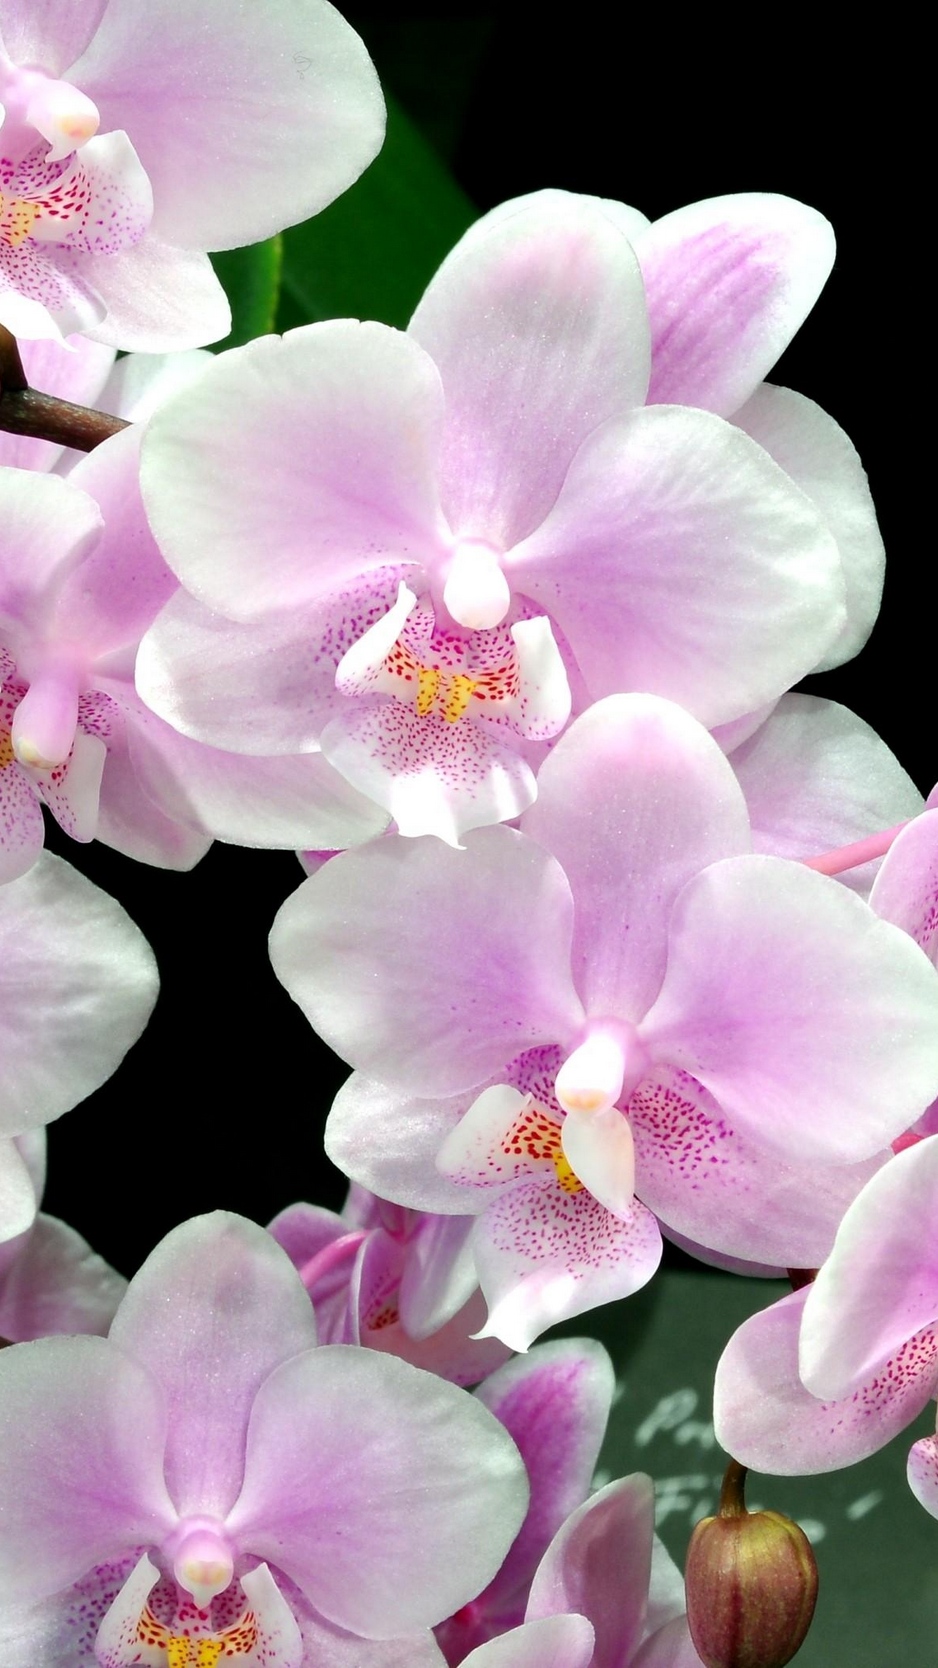 Wallpaper Orchid, Flower, Twig, Black Background - Orchid Wallpaper For Iphone - HD Wallpaper 